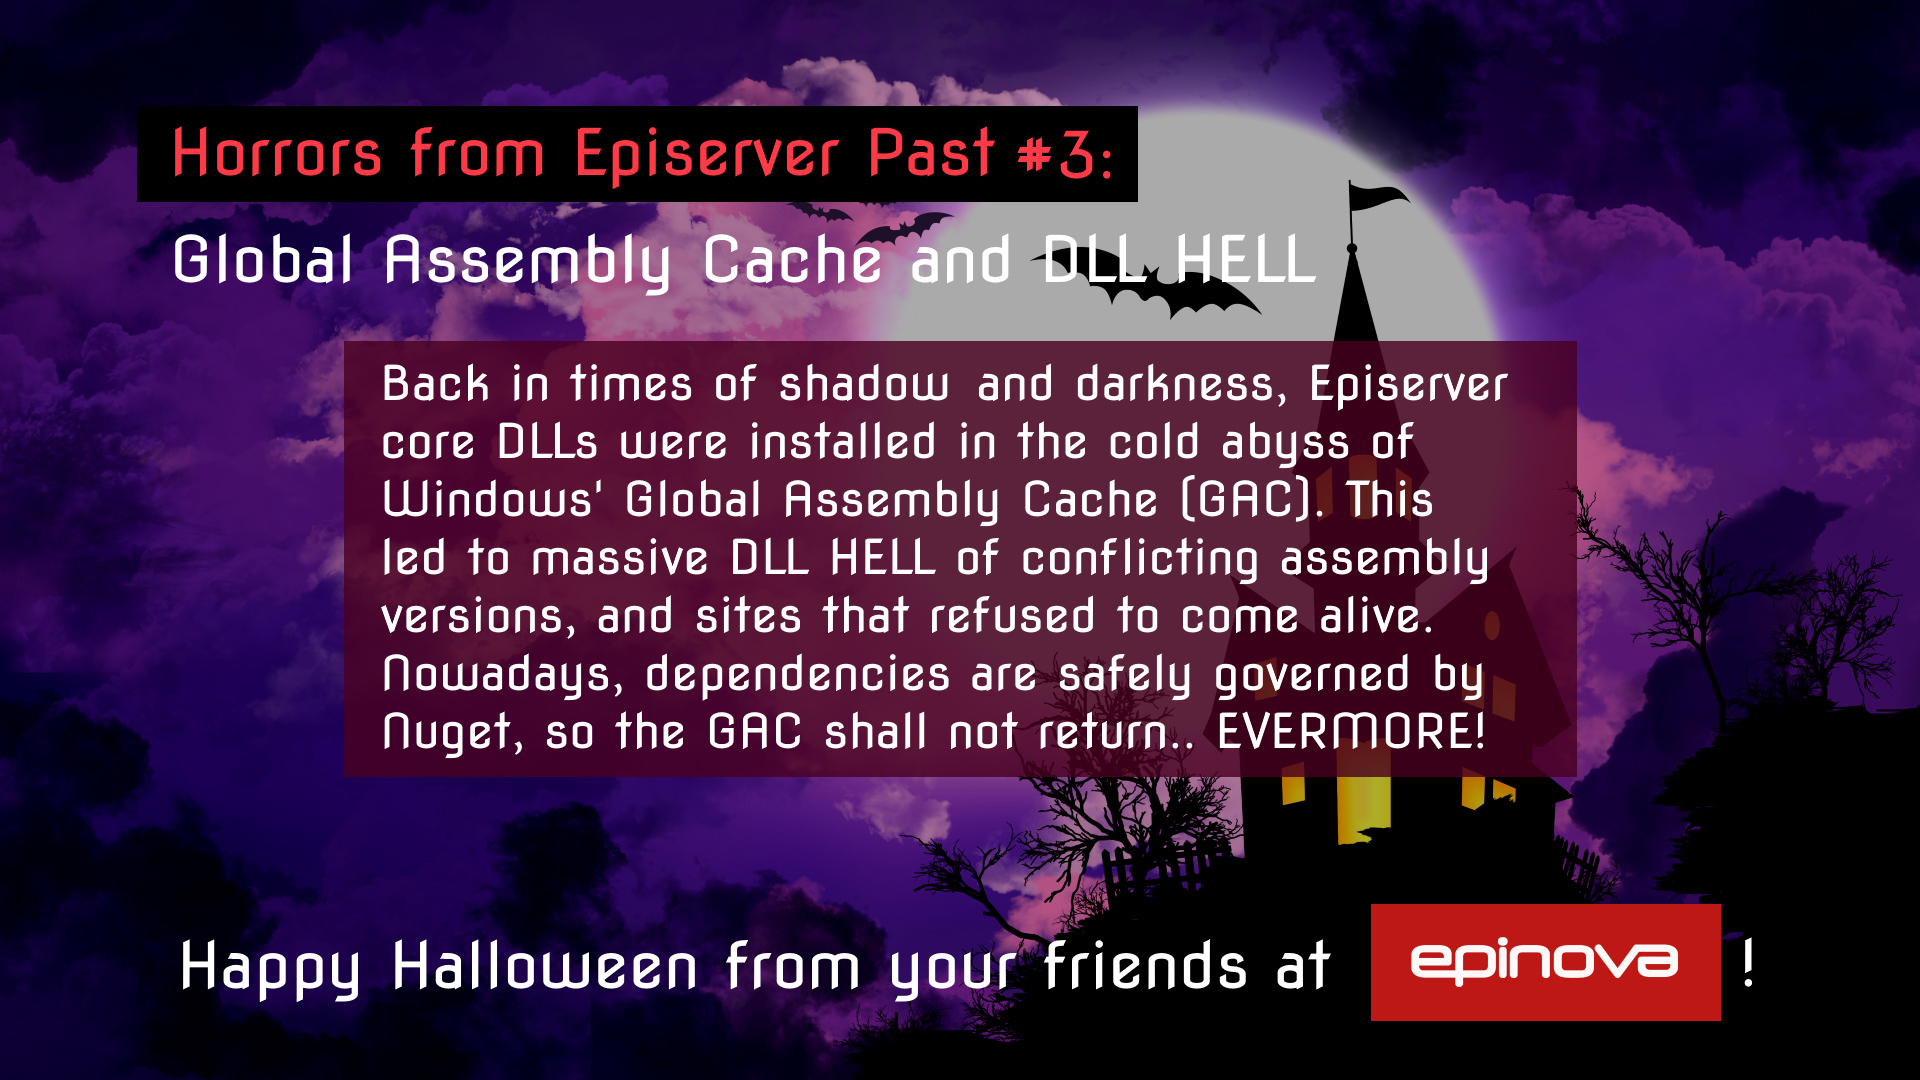 Humorous Halloween throwback to Episerver's GAC DLL hell